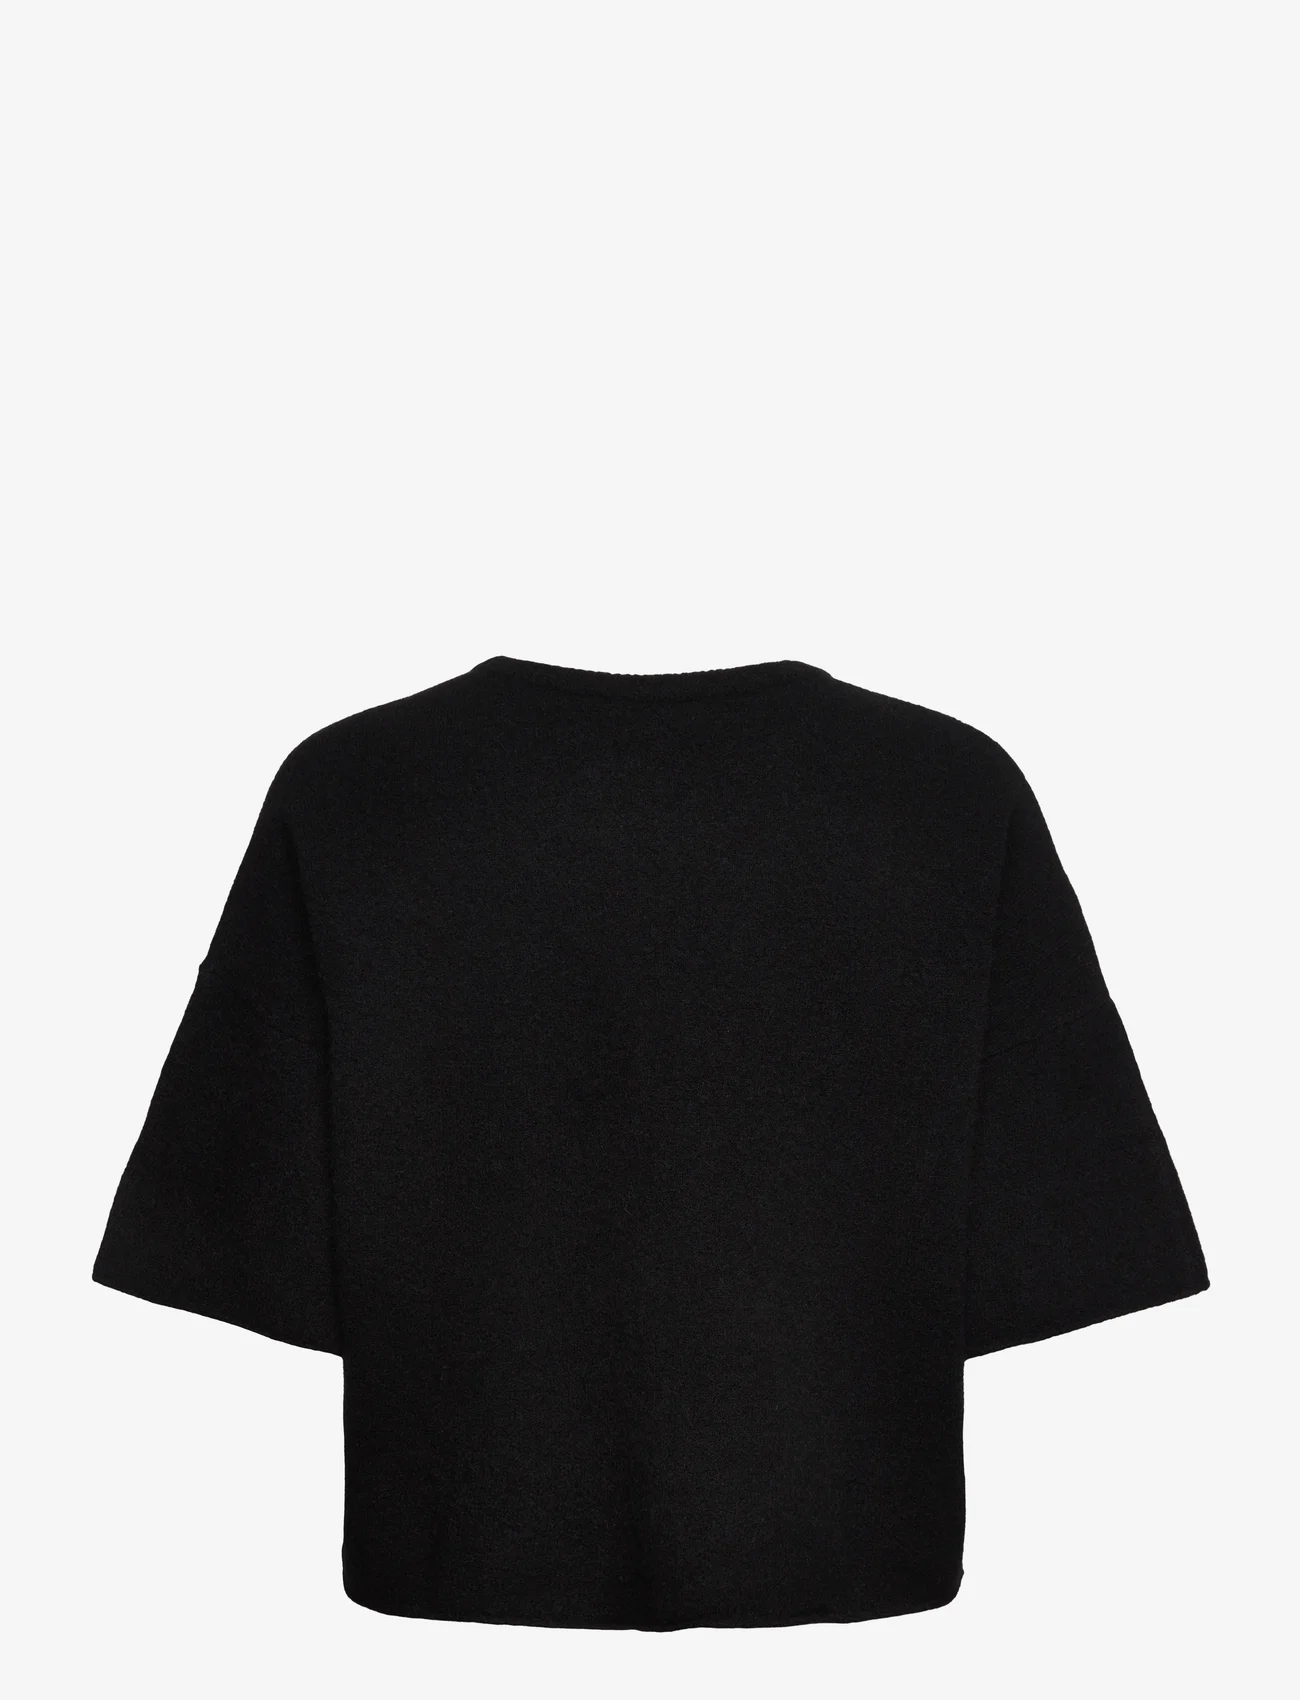 Filippa K - Yak Tee - t-shirts - black - 1